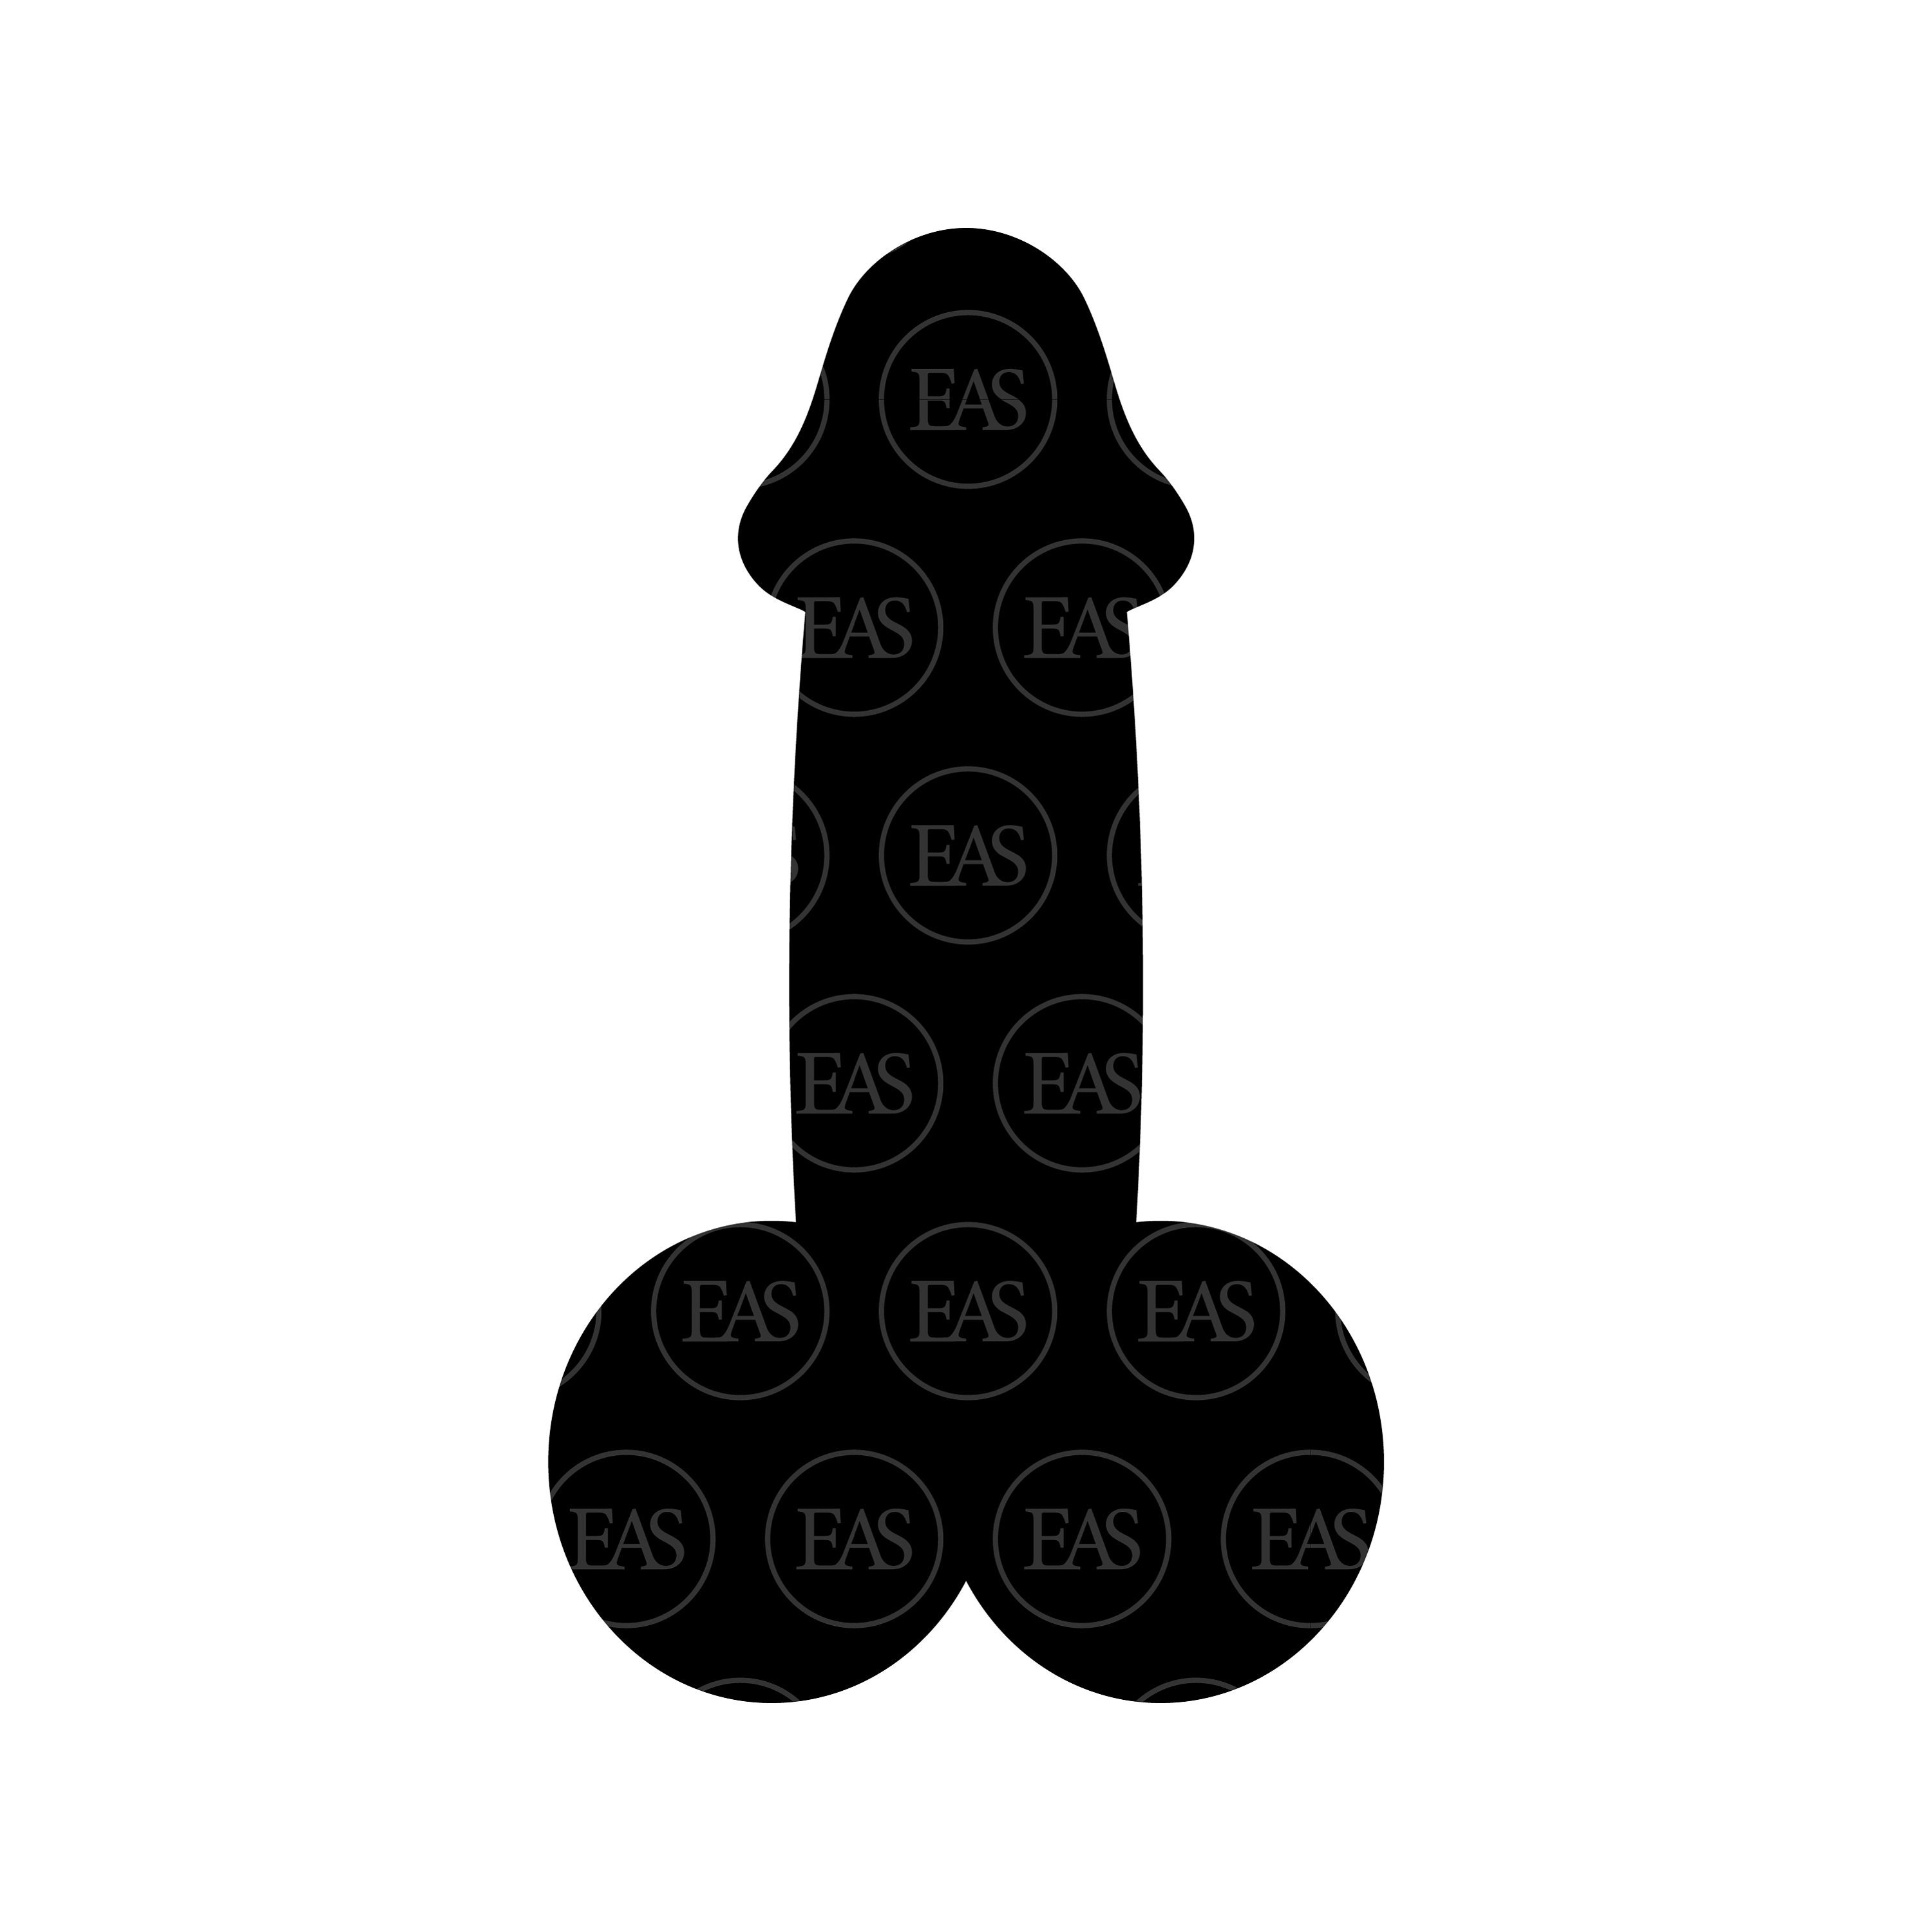 Penis Svg Penis Icon Clip Art Vector Cut File For Cricut Etsy Images